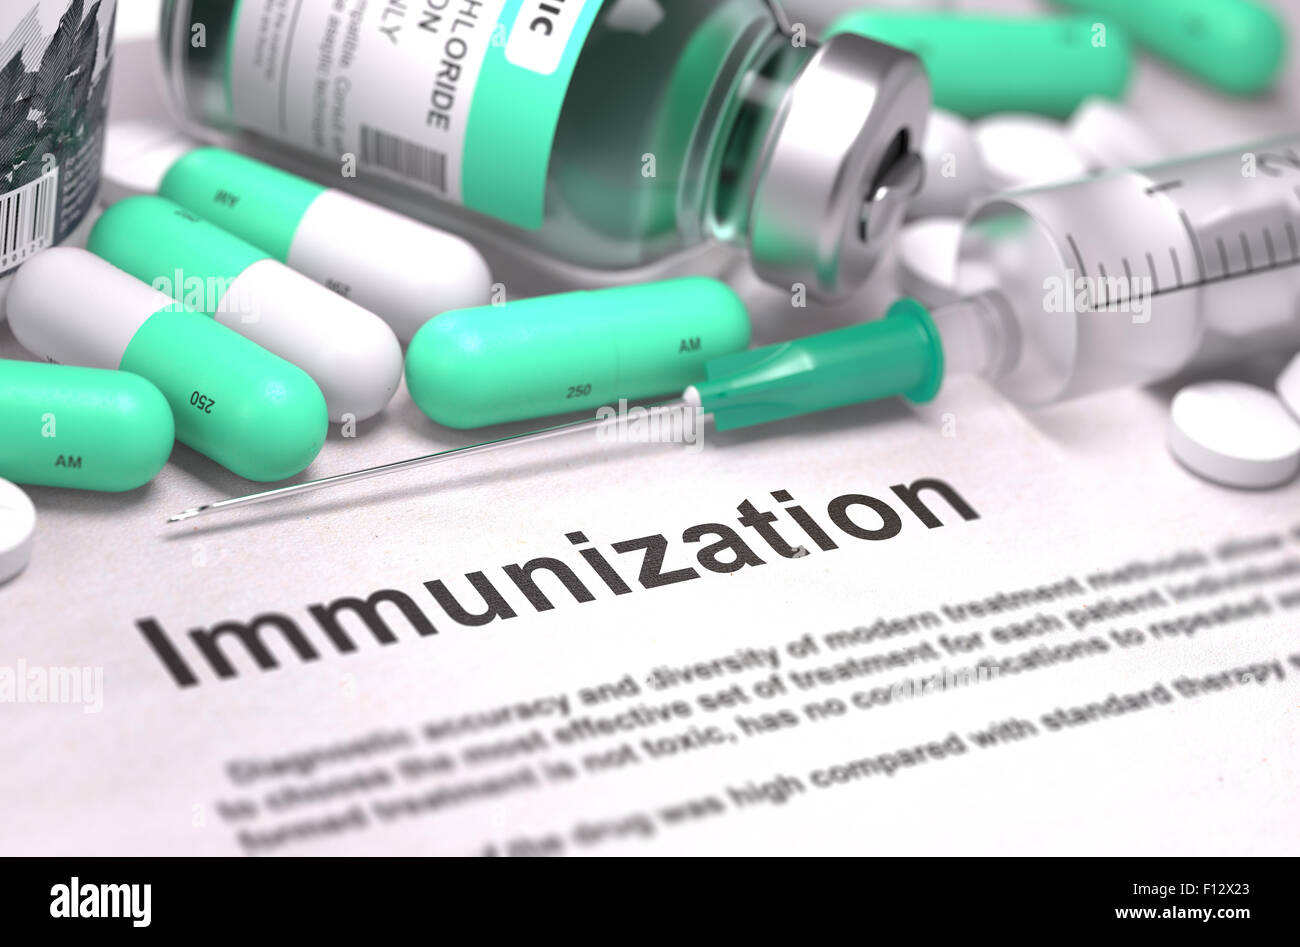 Immunization - Medical Concept. Stock Photo